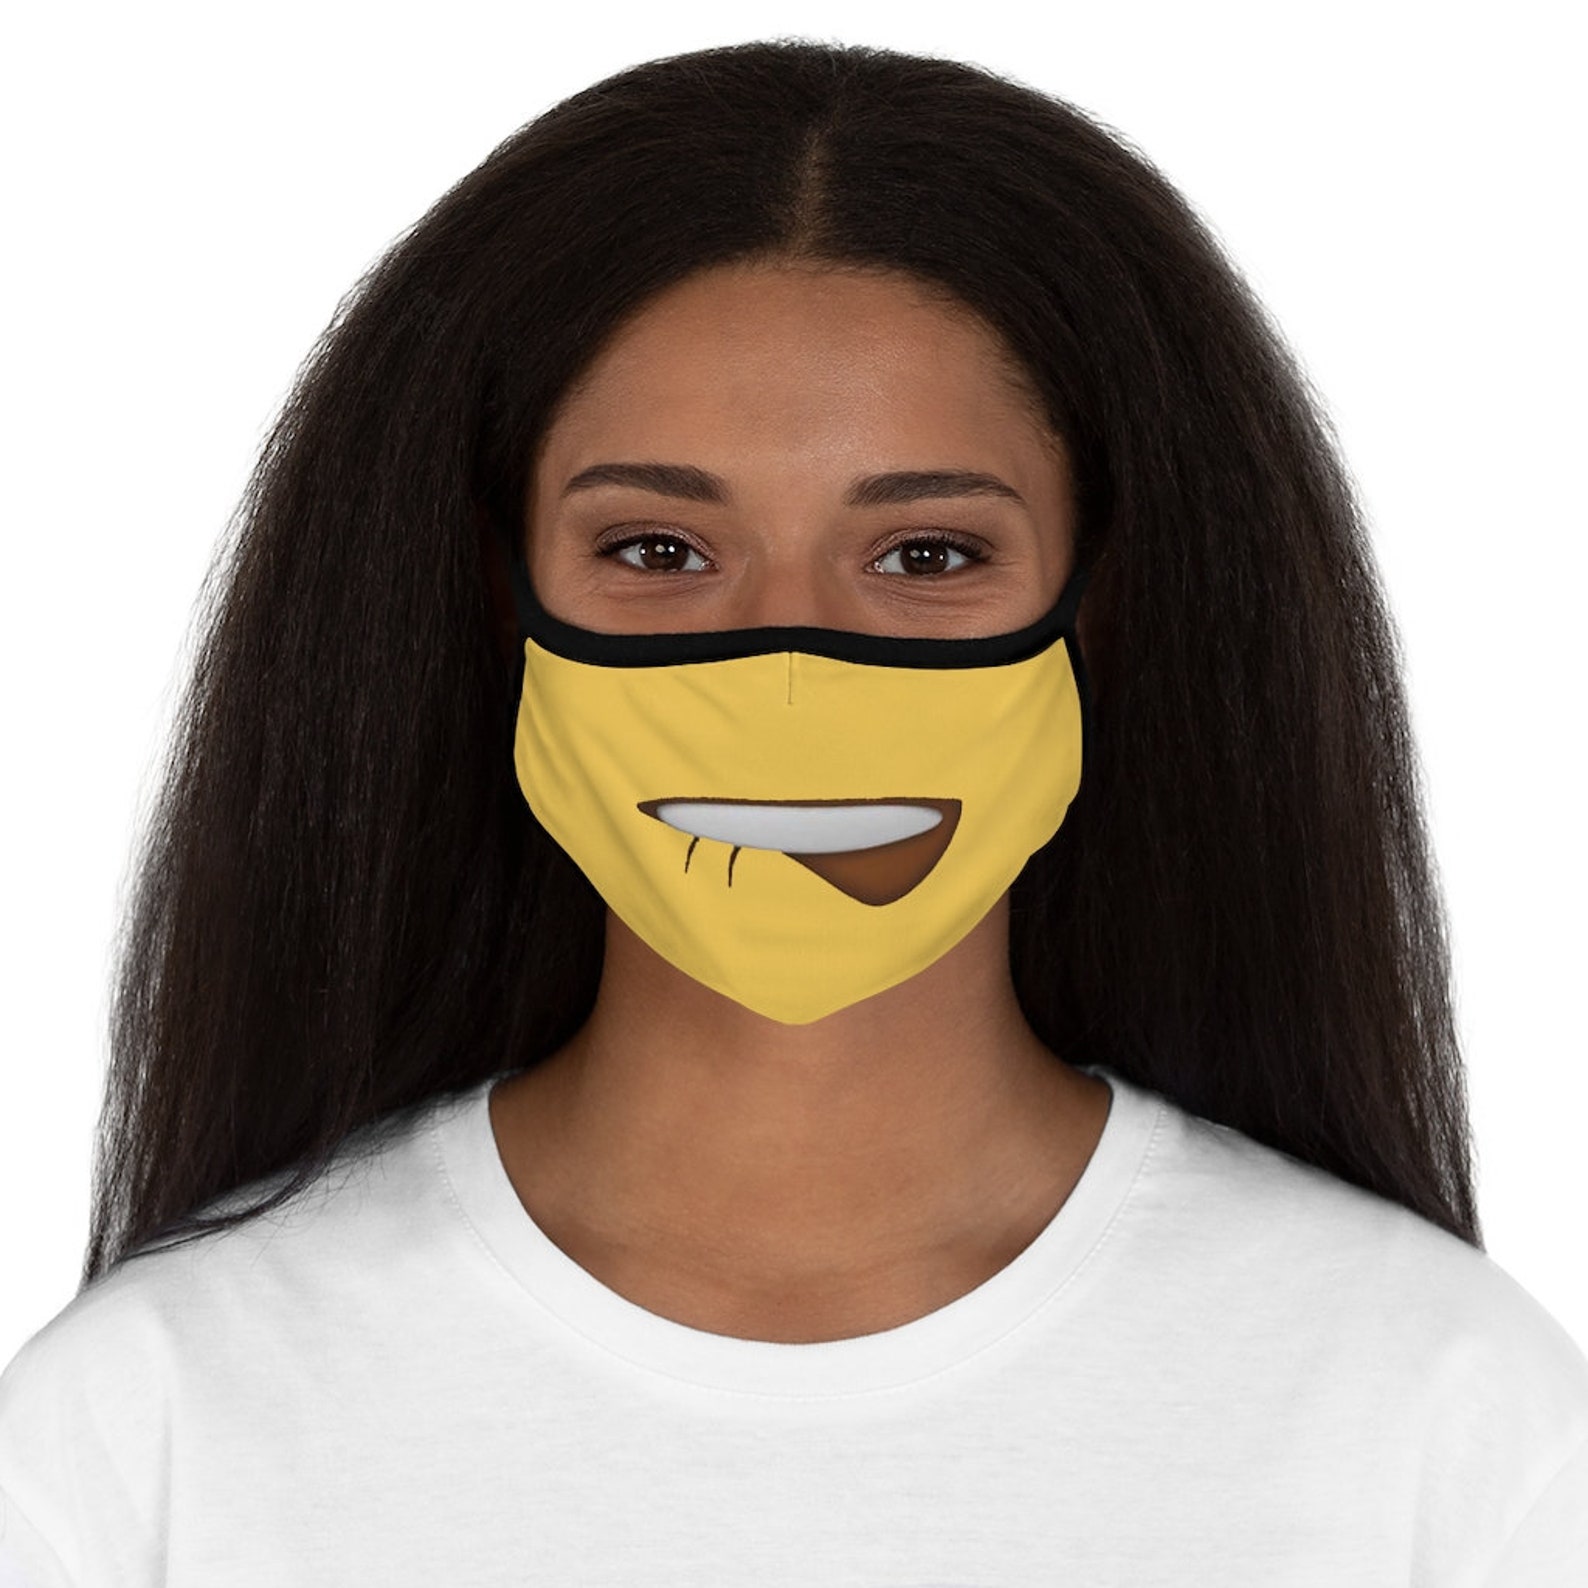 Lip bite emoji face mask | Etsy